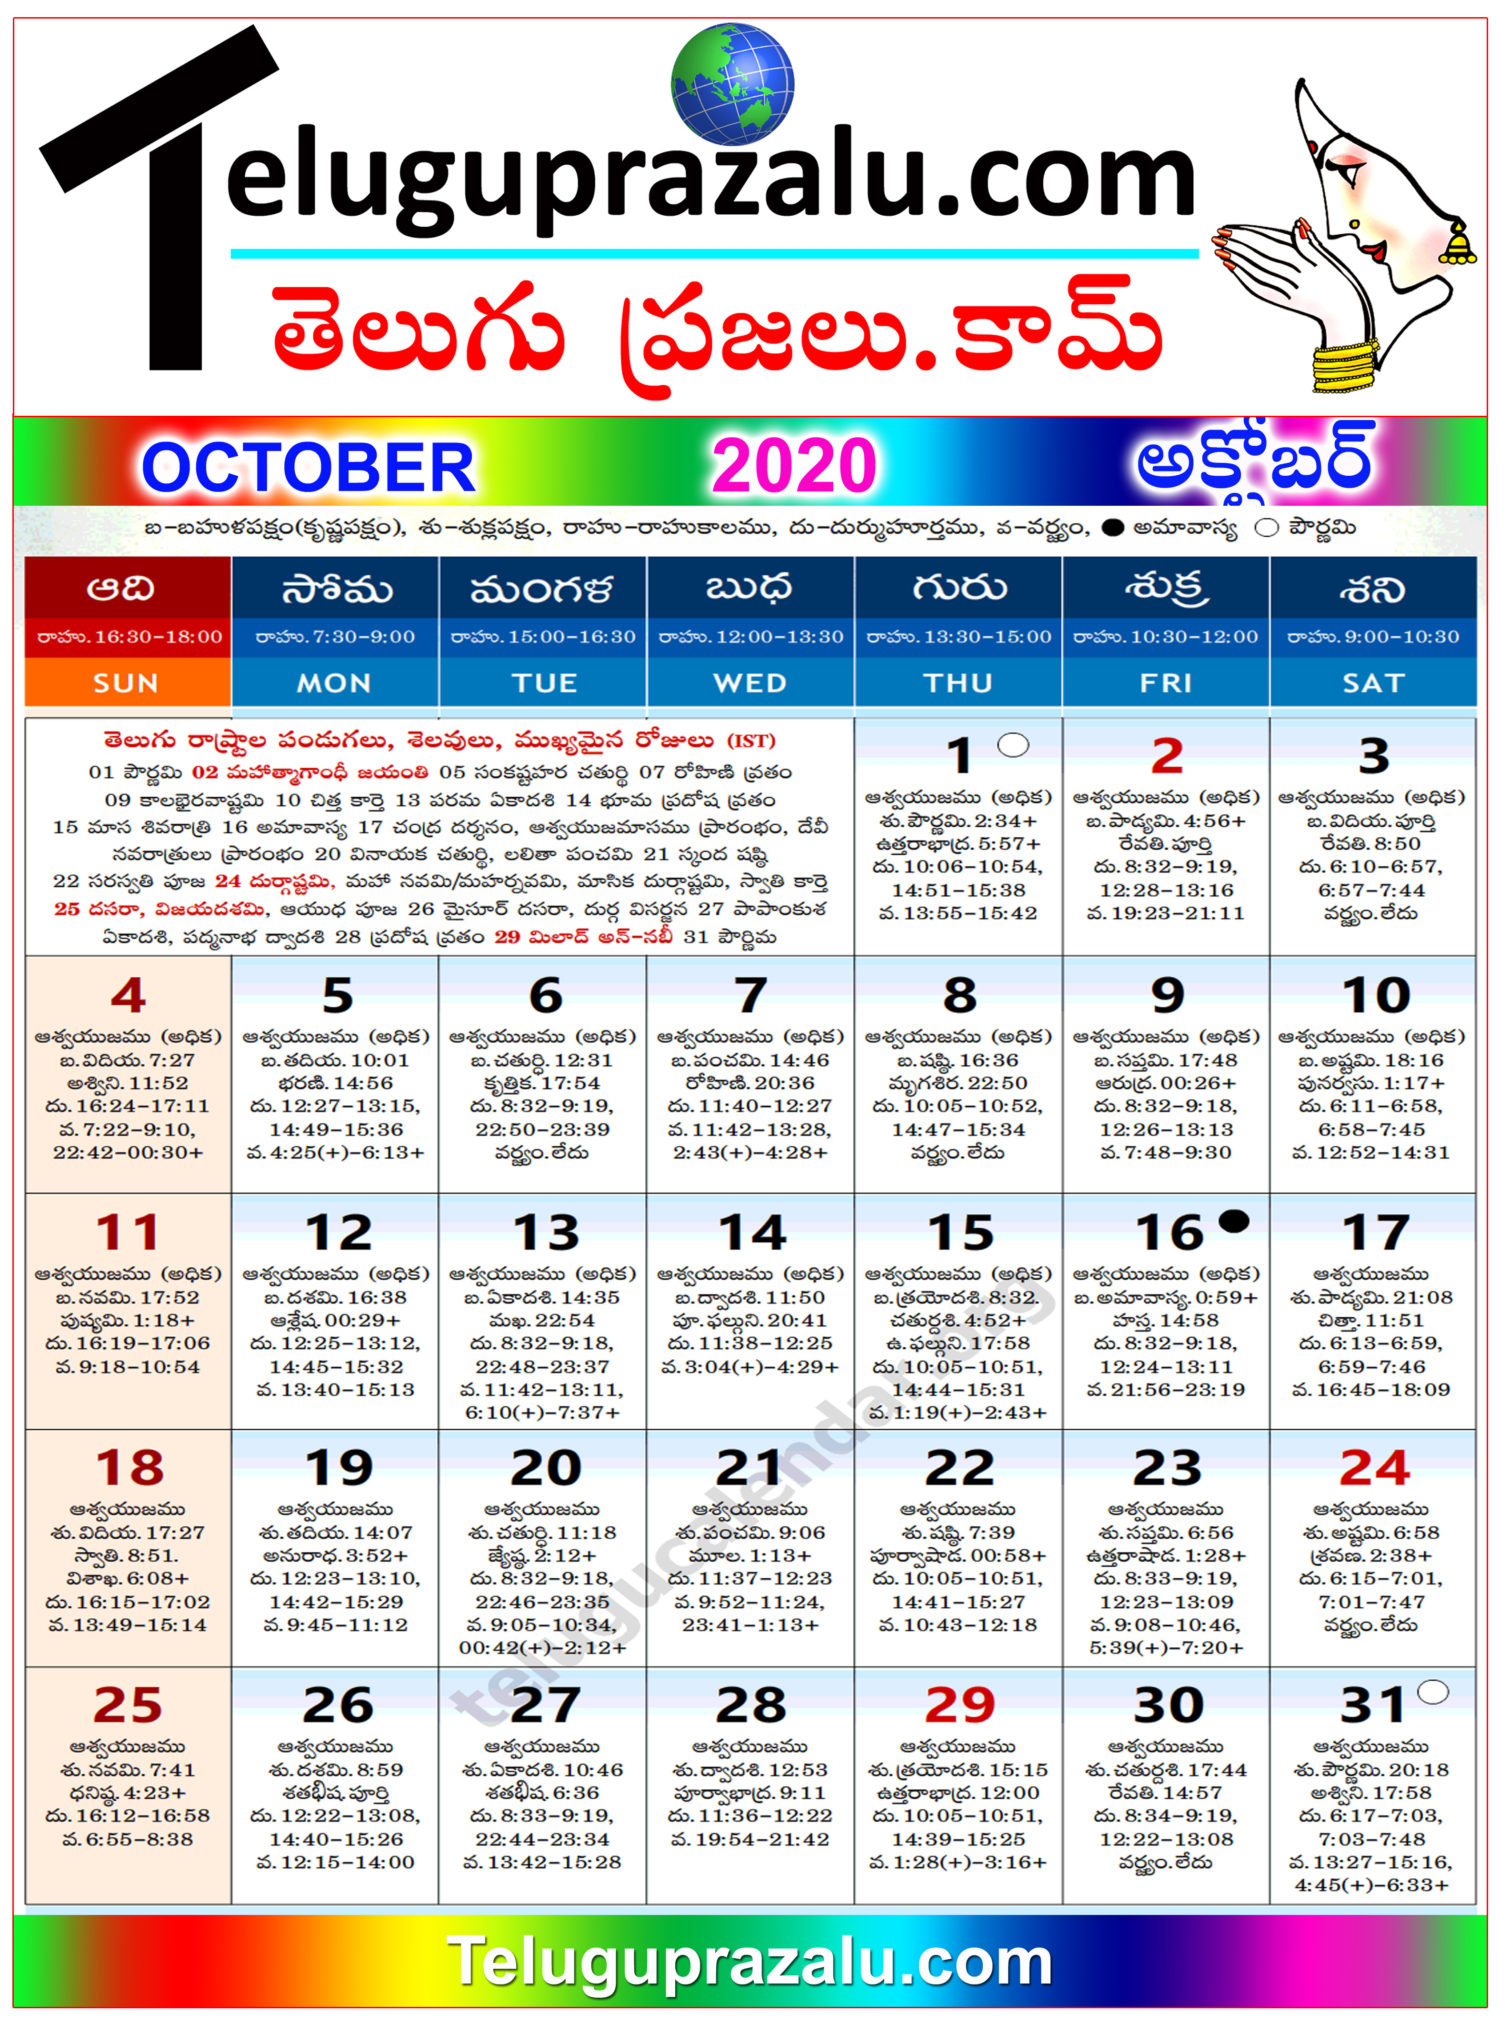 Telugu Calendar 2020 October Telugu News, Movies and More